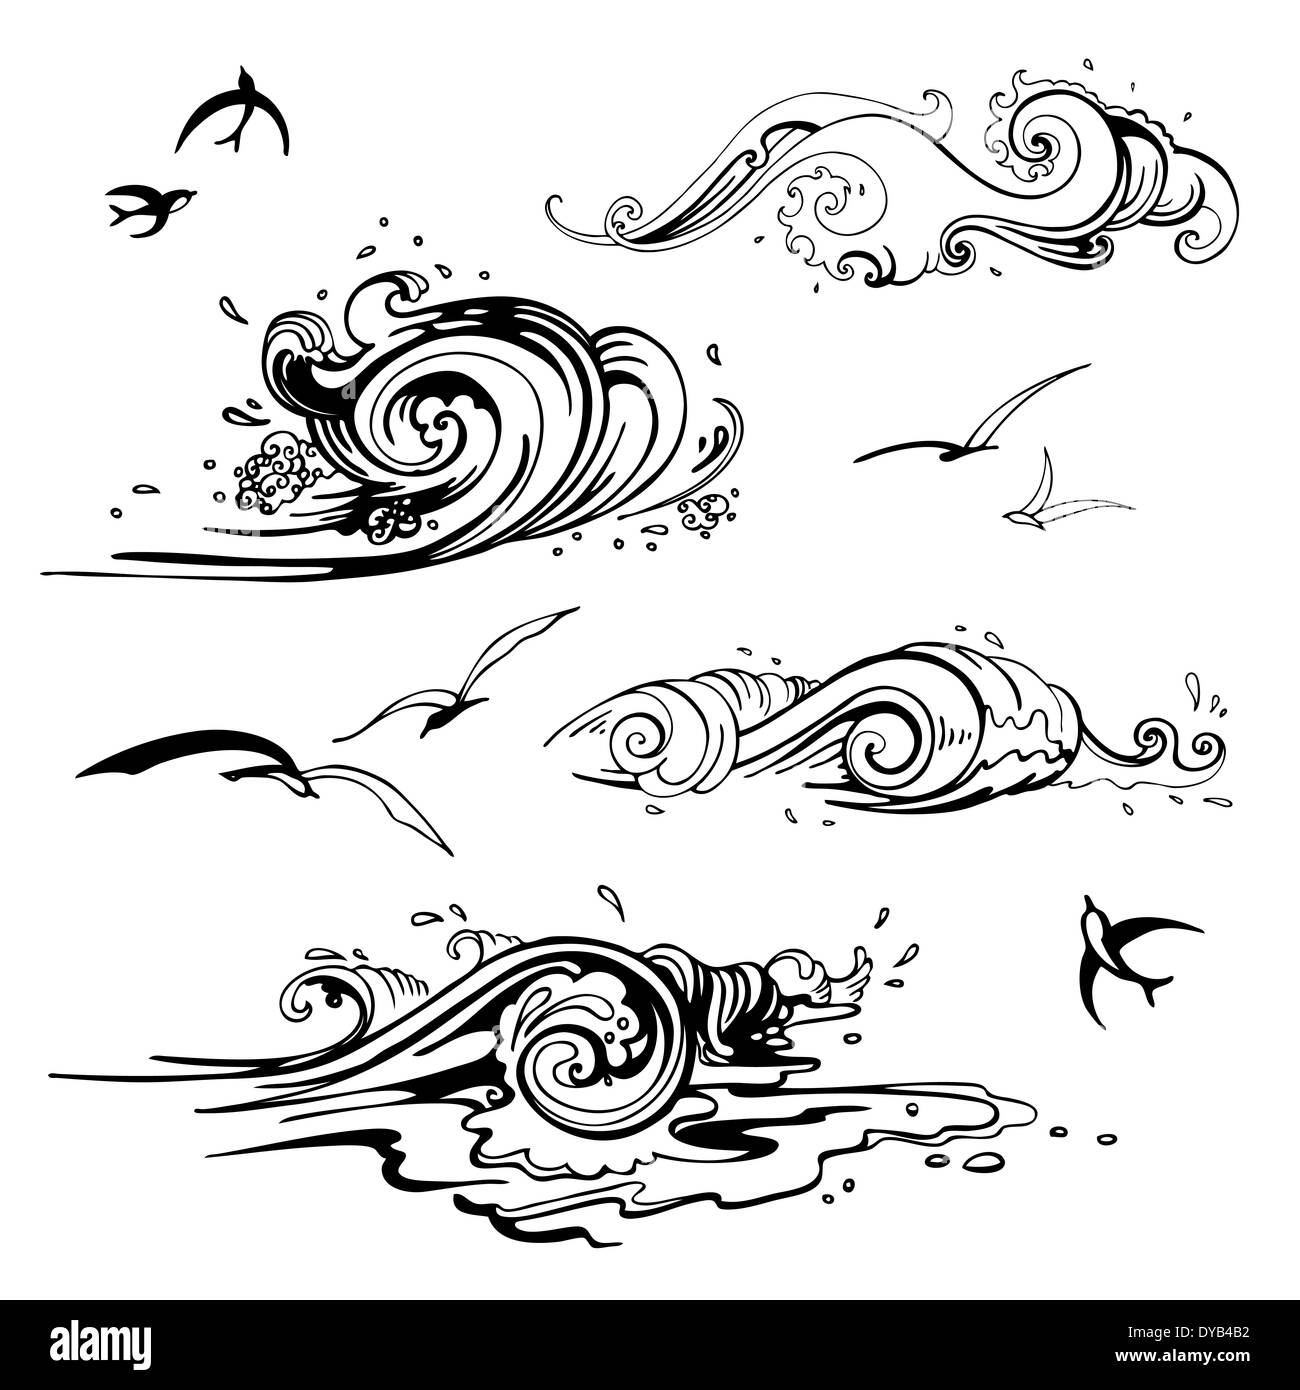 Sea waves set. Hand drawn vector illustration. Stock Photo